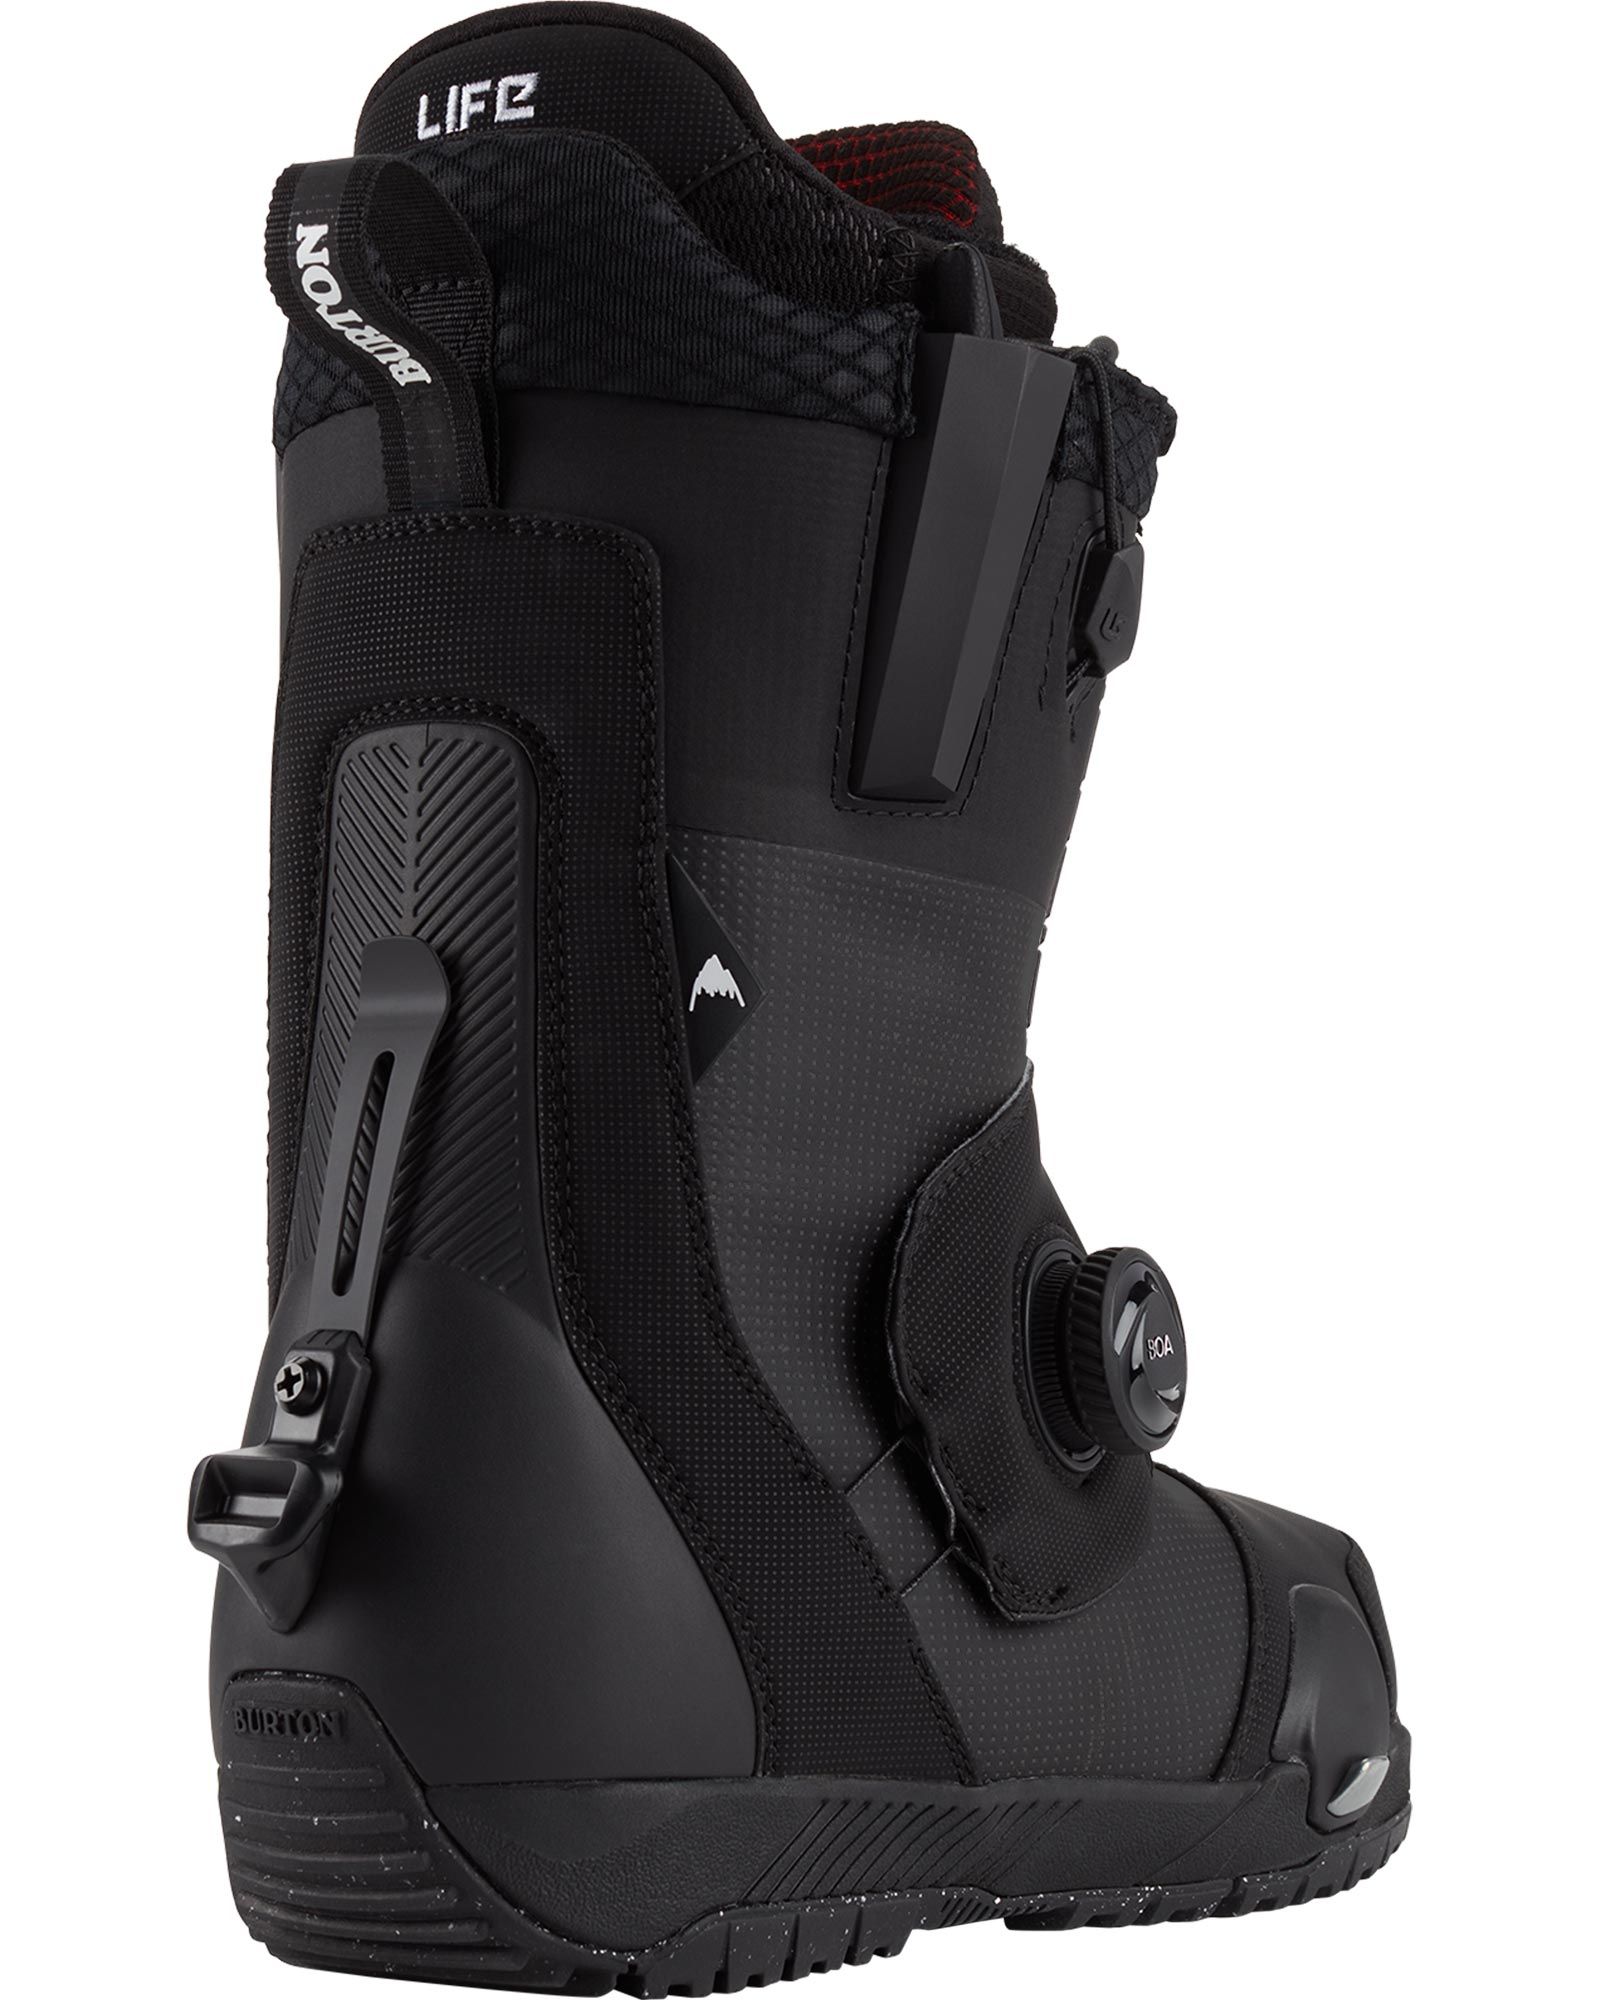 boots de snowboard burton ION step on 2021